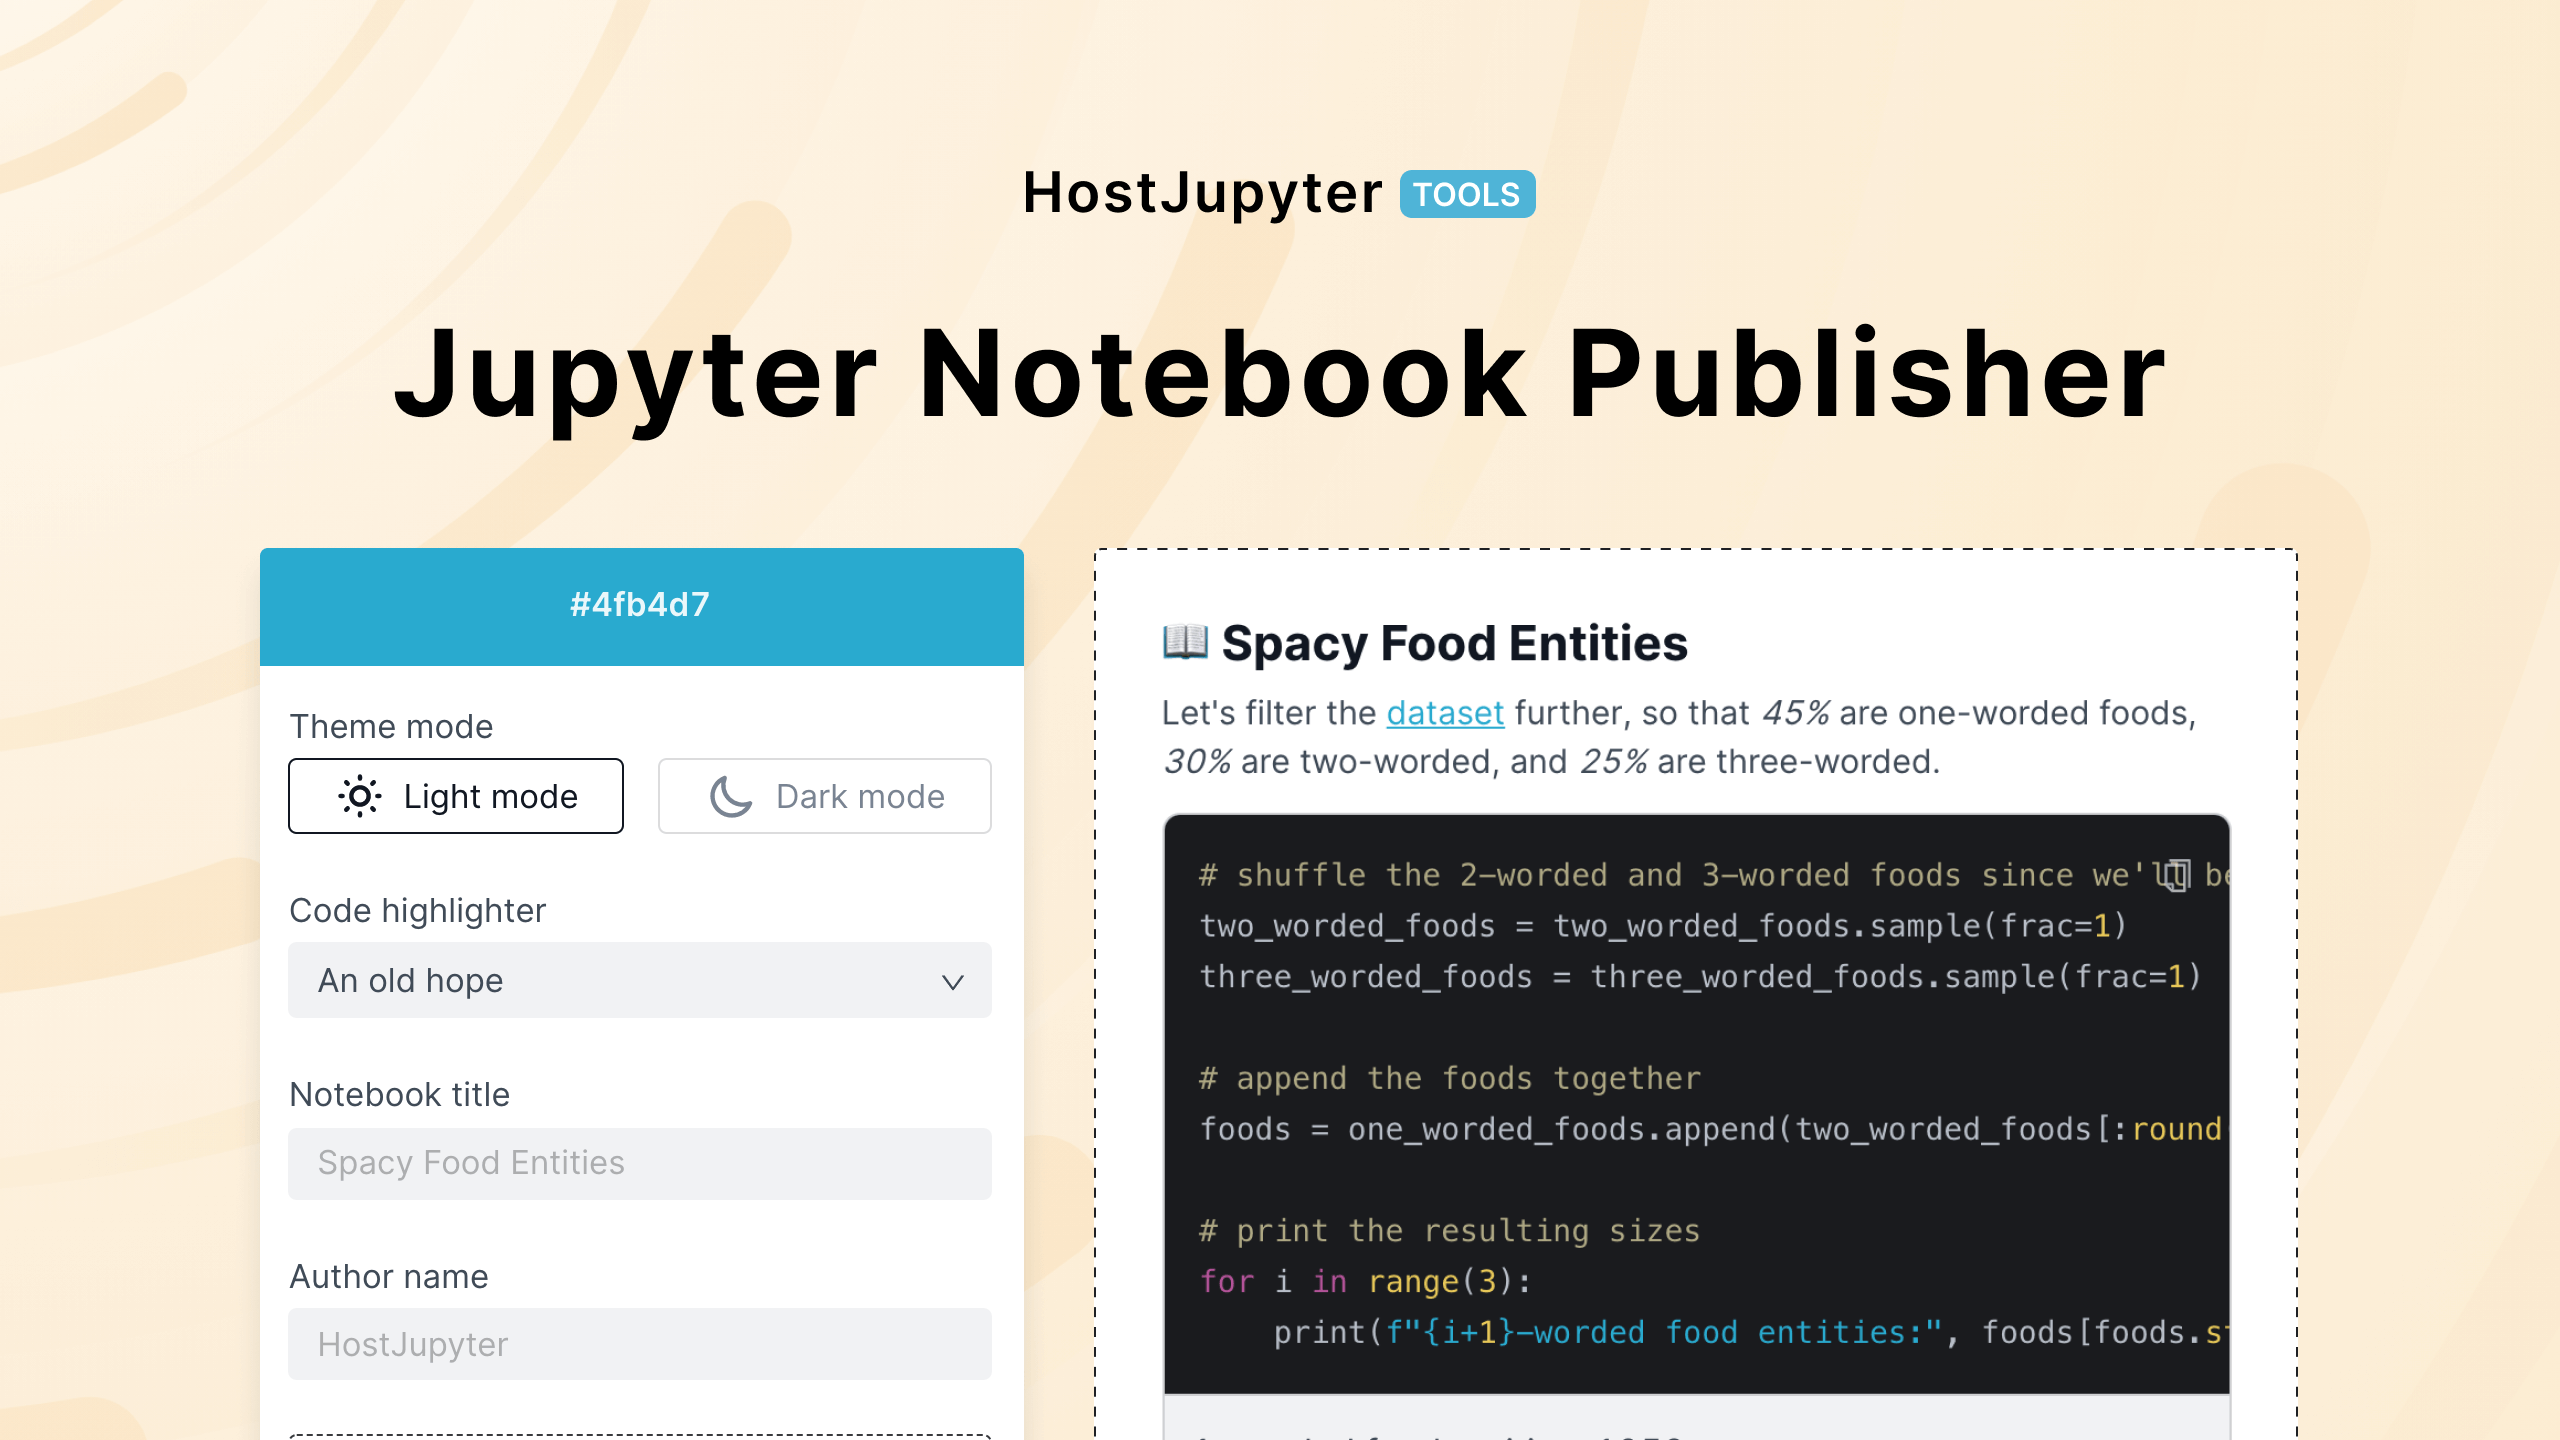 Screenshot of the HostJupyter application interface